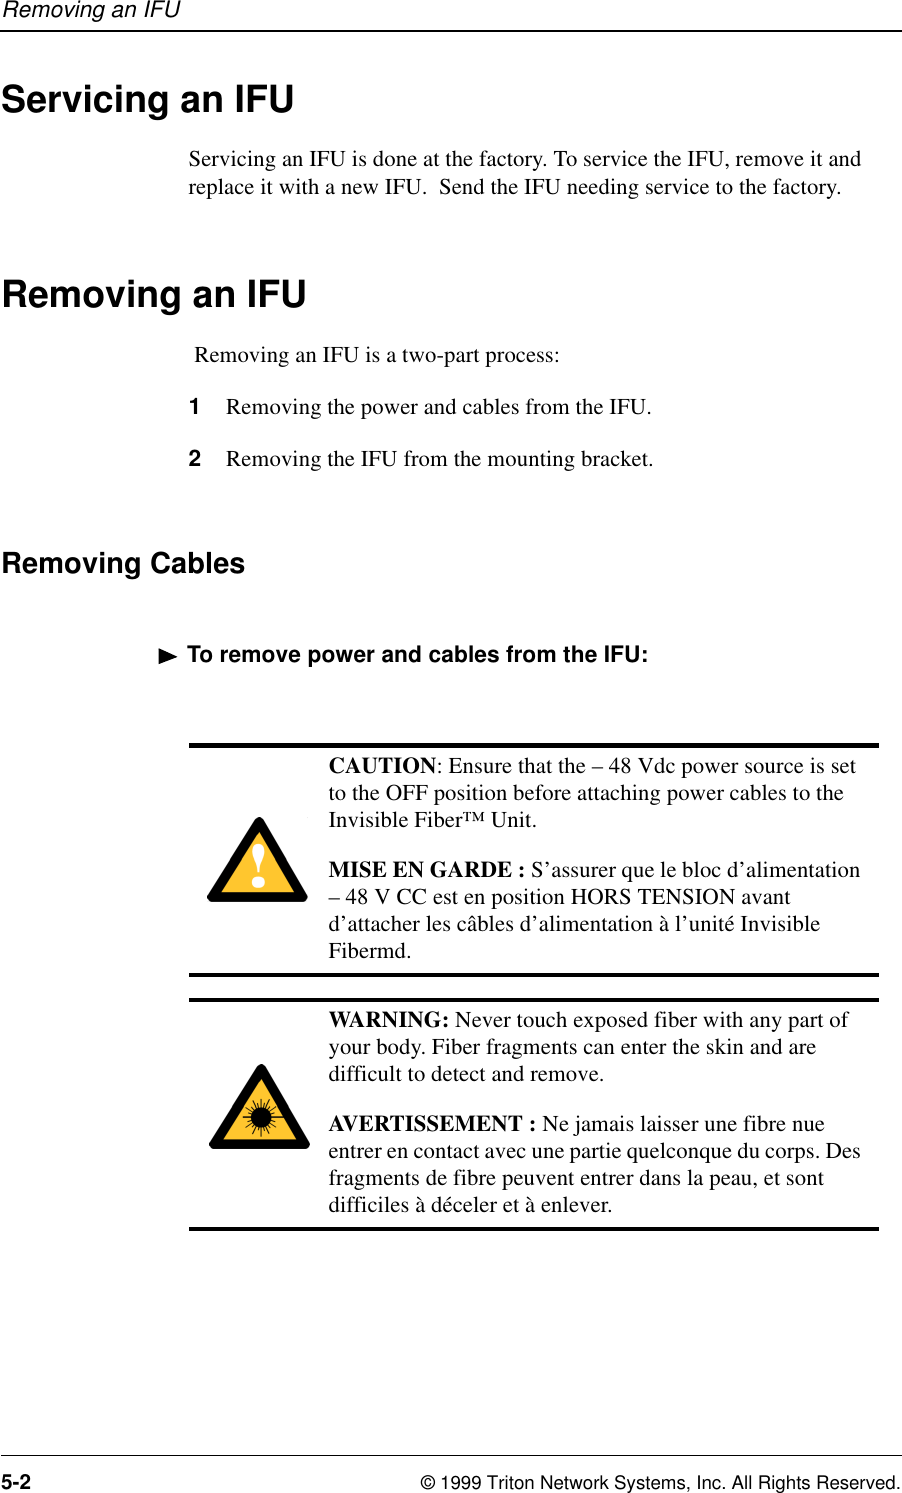 Removing an IFU5-2 © 1999 Triton Network Systems, Inc. All Rights Reserved.Servicing an IFUServicing an IFU is done at the factory. To service the IFU, remove it and replace it with a new IFU.  Send the IFU needing service to the factory.Removing an IFU Removing an IFU is a two-part process:1Removing the power and cables from the IFU.2Removing the IFU from the mounting bracket.Removing CablesTo remove power and cables from the IFU:CAUTION: Ensure that the – 48 Vdc power source is set to the OFF position before attaching power cables to the Invisible Fiber™ Unit.MISE EN GARDE : S’assurer que le bloc d’alimentation – 48 V CC est en position HORS TENSION avant d’attacher les câbles d’alimentation à l’unité Invisible Fibermd.WARNING: Never touch exposed fiber with any part of your body. Fiber fragments can enter the skin and are difficult to detect and remove.AVERTISSEMENT : Ne jamais laisser une fibre nue entrer en contact avec une partie quelconque du corps. Des fragments de fibre peuvent entrer dans la peau, et sont difficiles à déceler et à enlever.